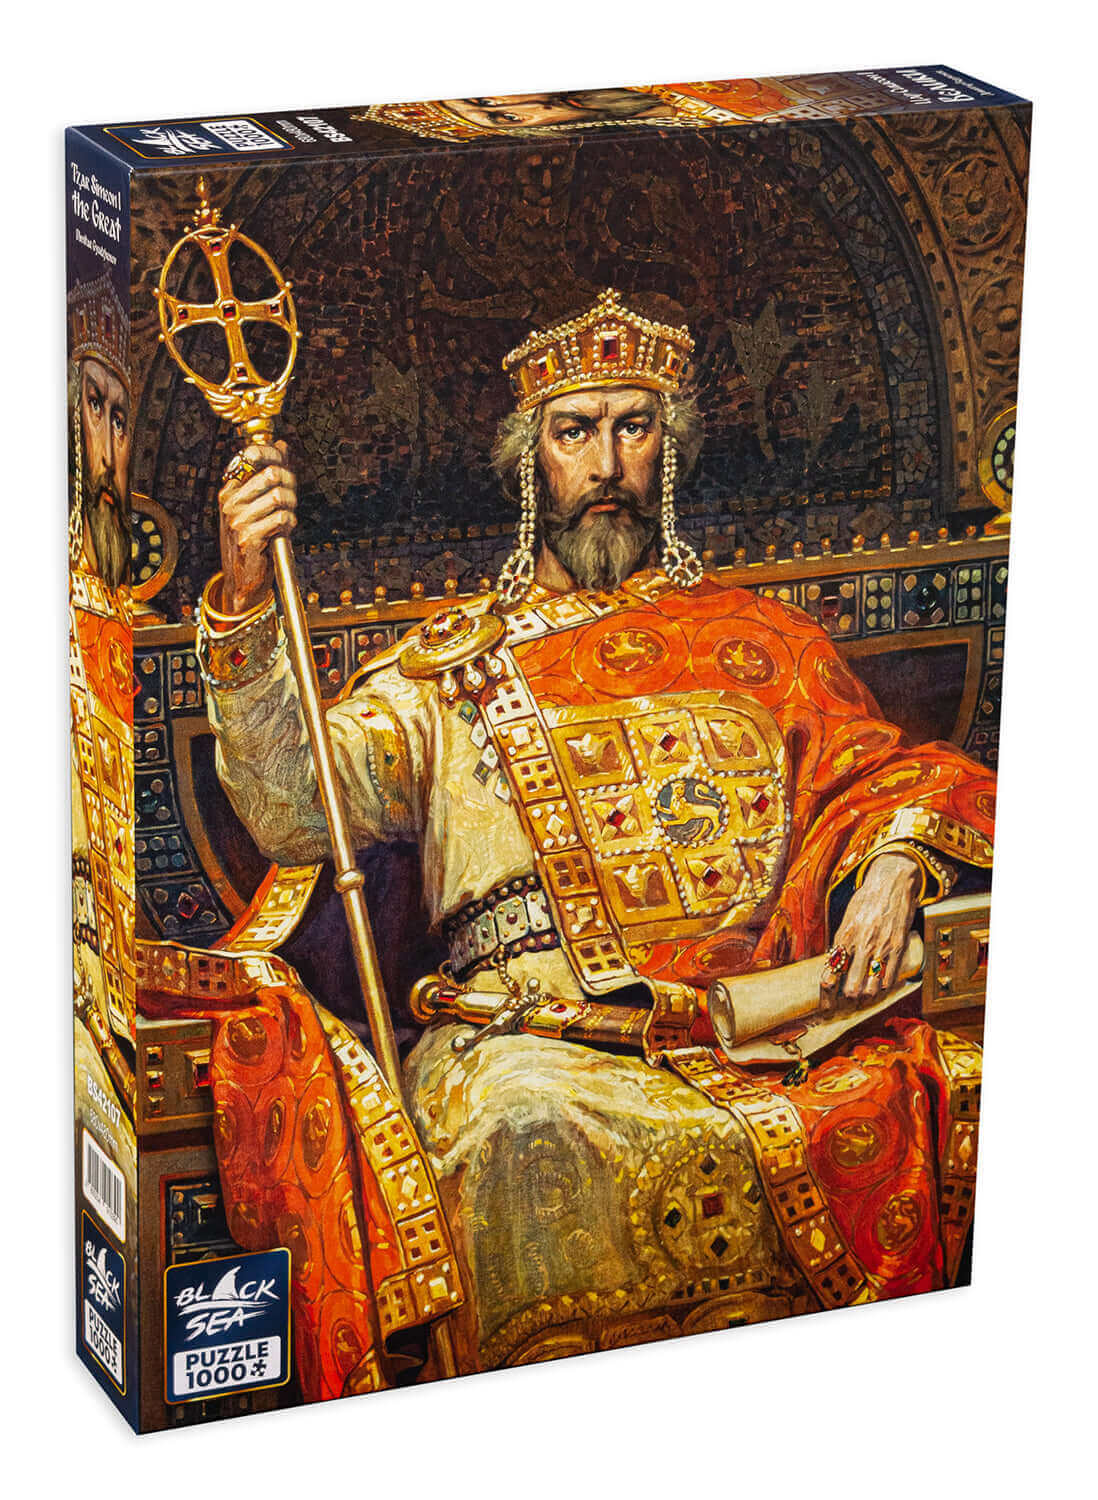 Puzzle Black Sea 1000 pieces - Tzar Simeon I the Great